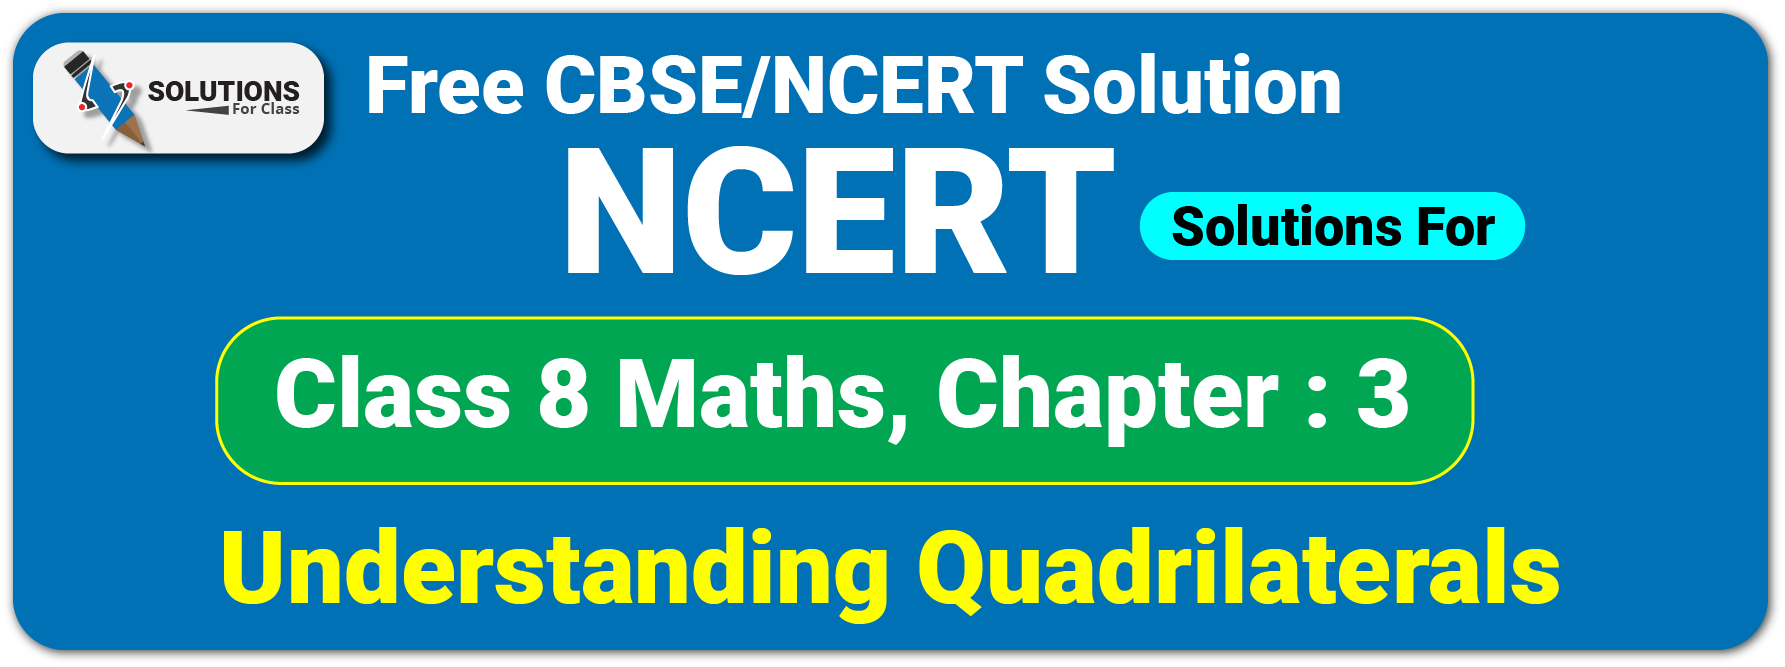 NCERT Solutions Class 8 Chapter 3, Understanding Quadrilaterals